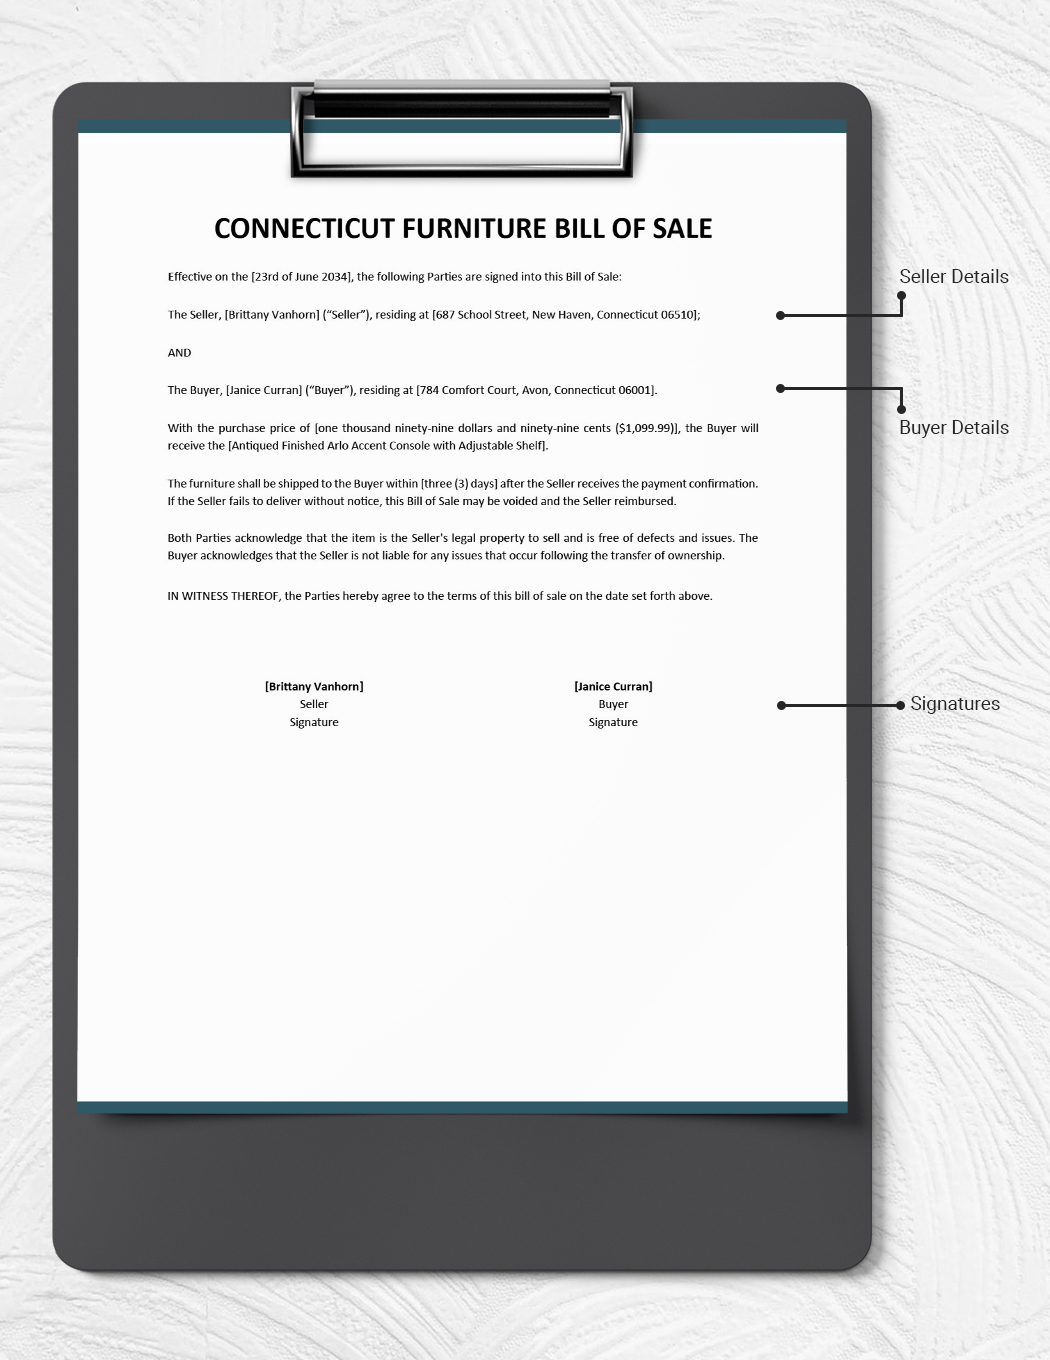 Connecticut Furniture Bill of Sale Template